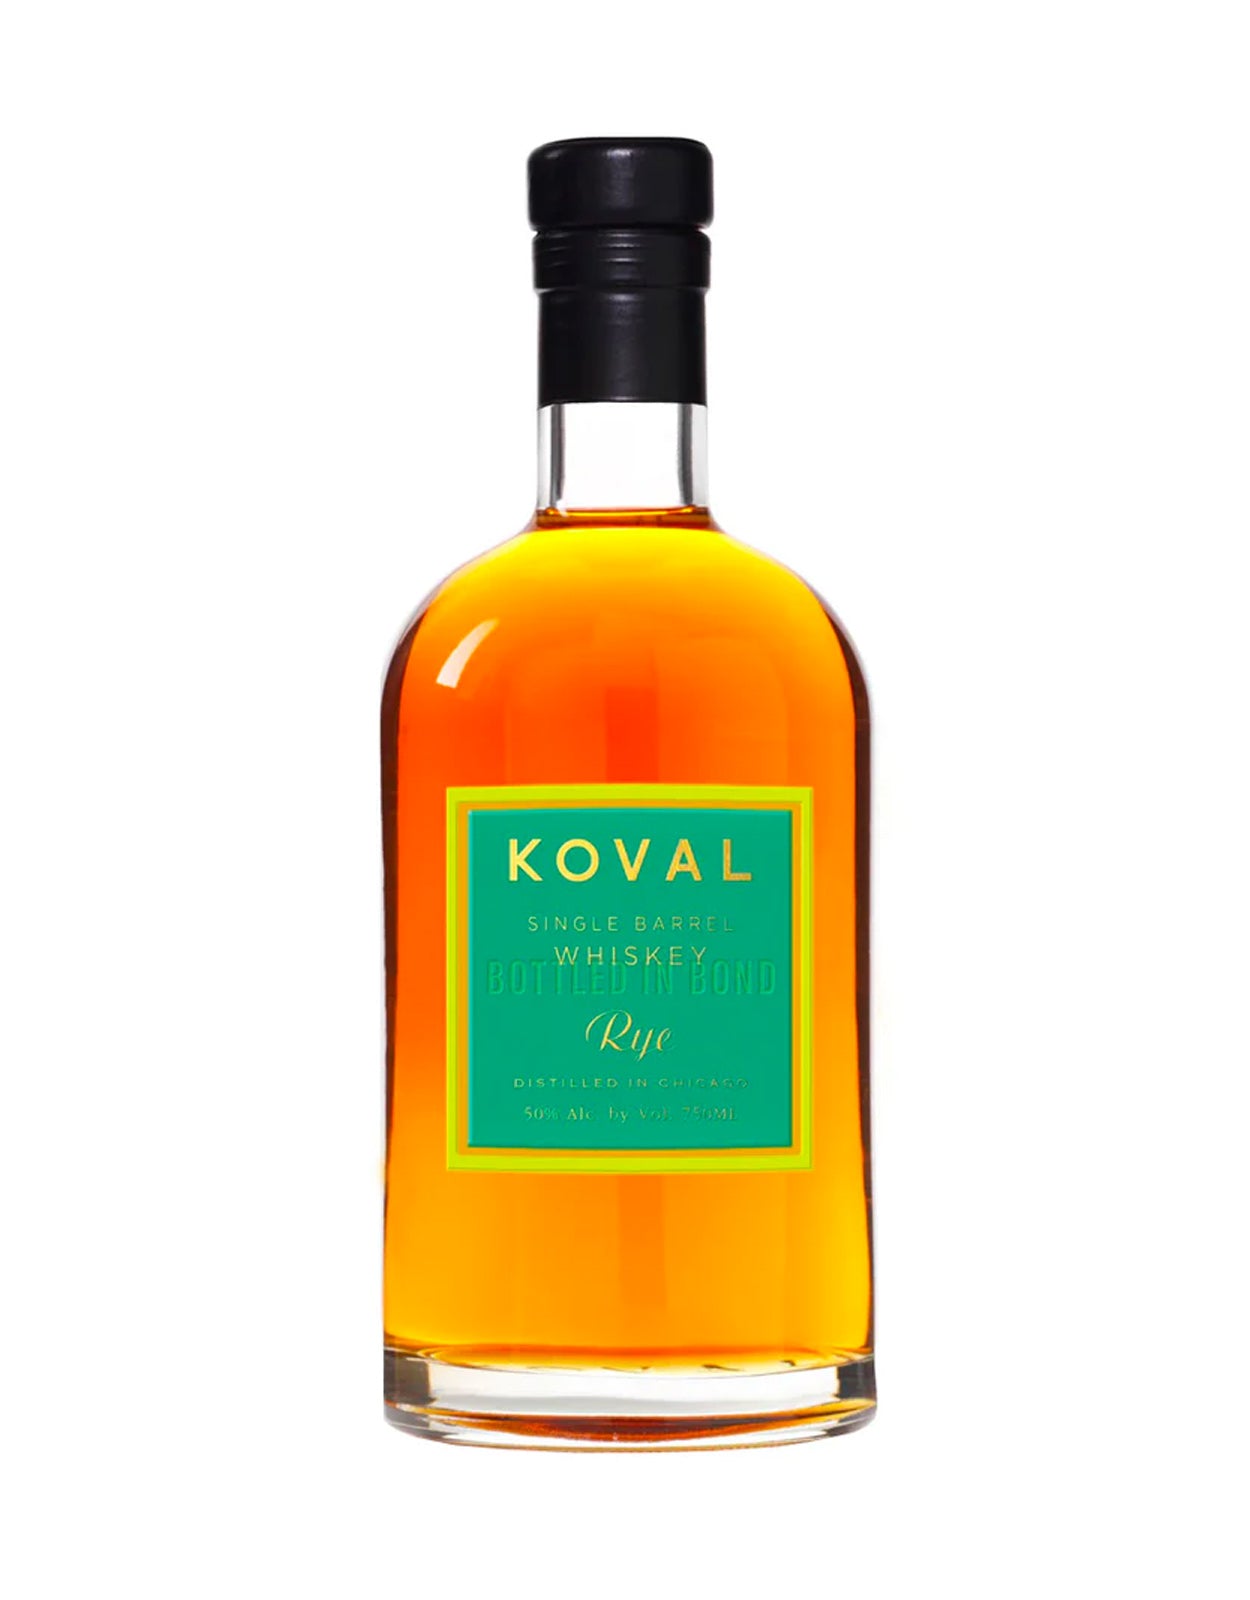 Koval Rye Bottled in Bond